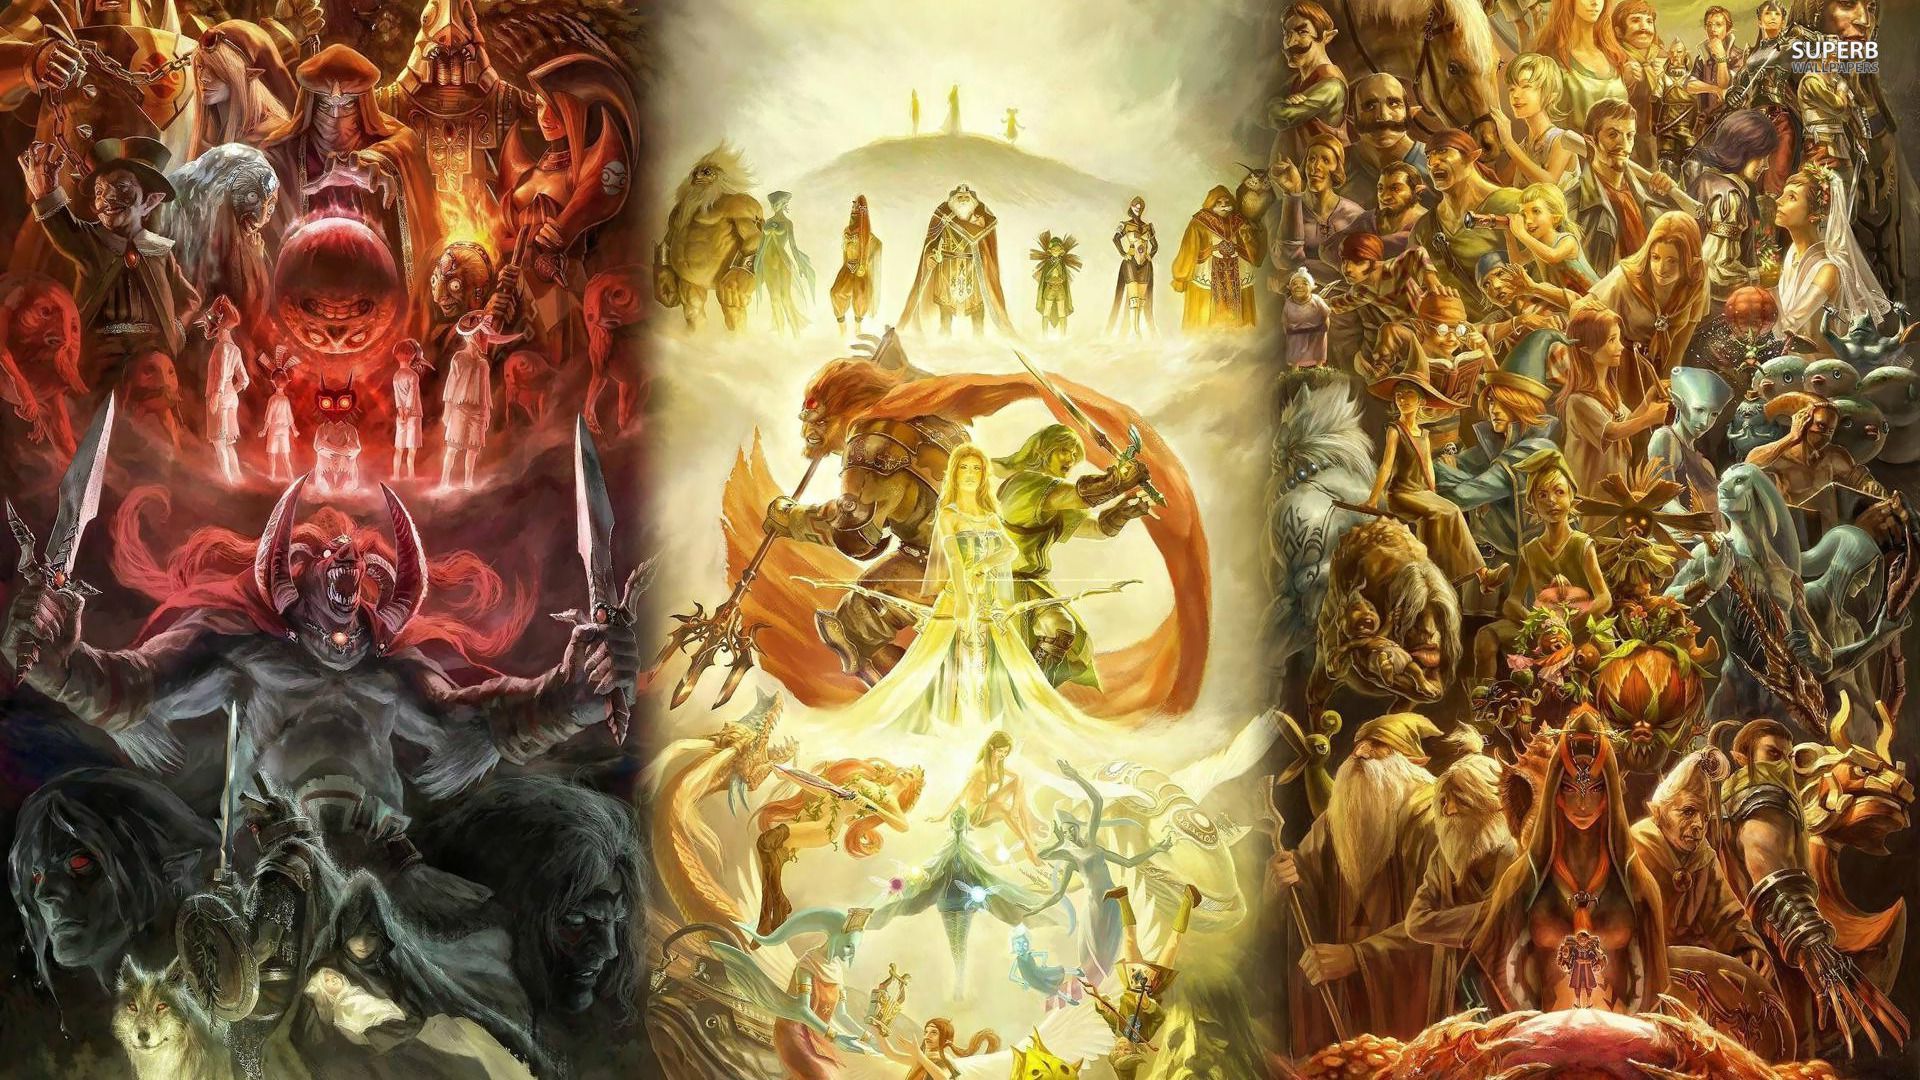 The Legend of Zelda Wallpaper HD | Wallpapers, Backgrounds, Images ...